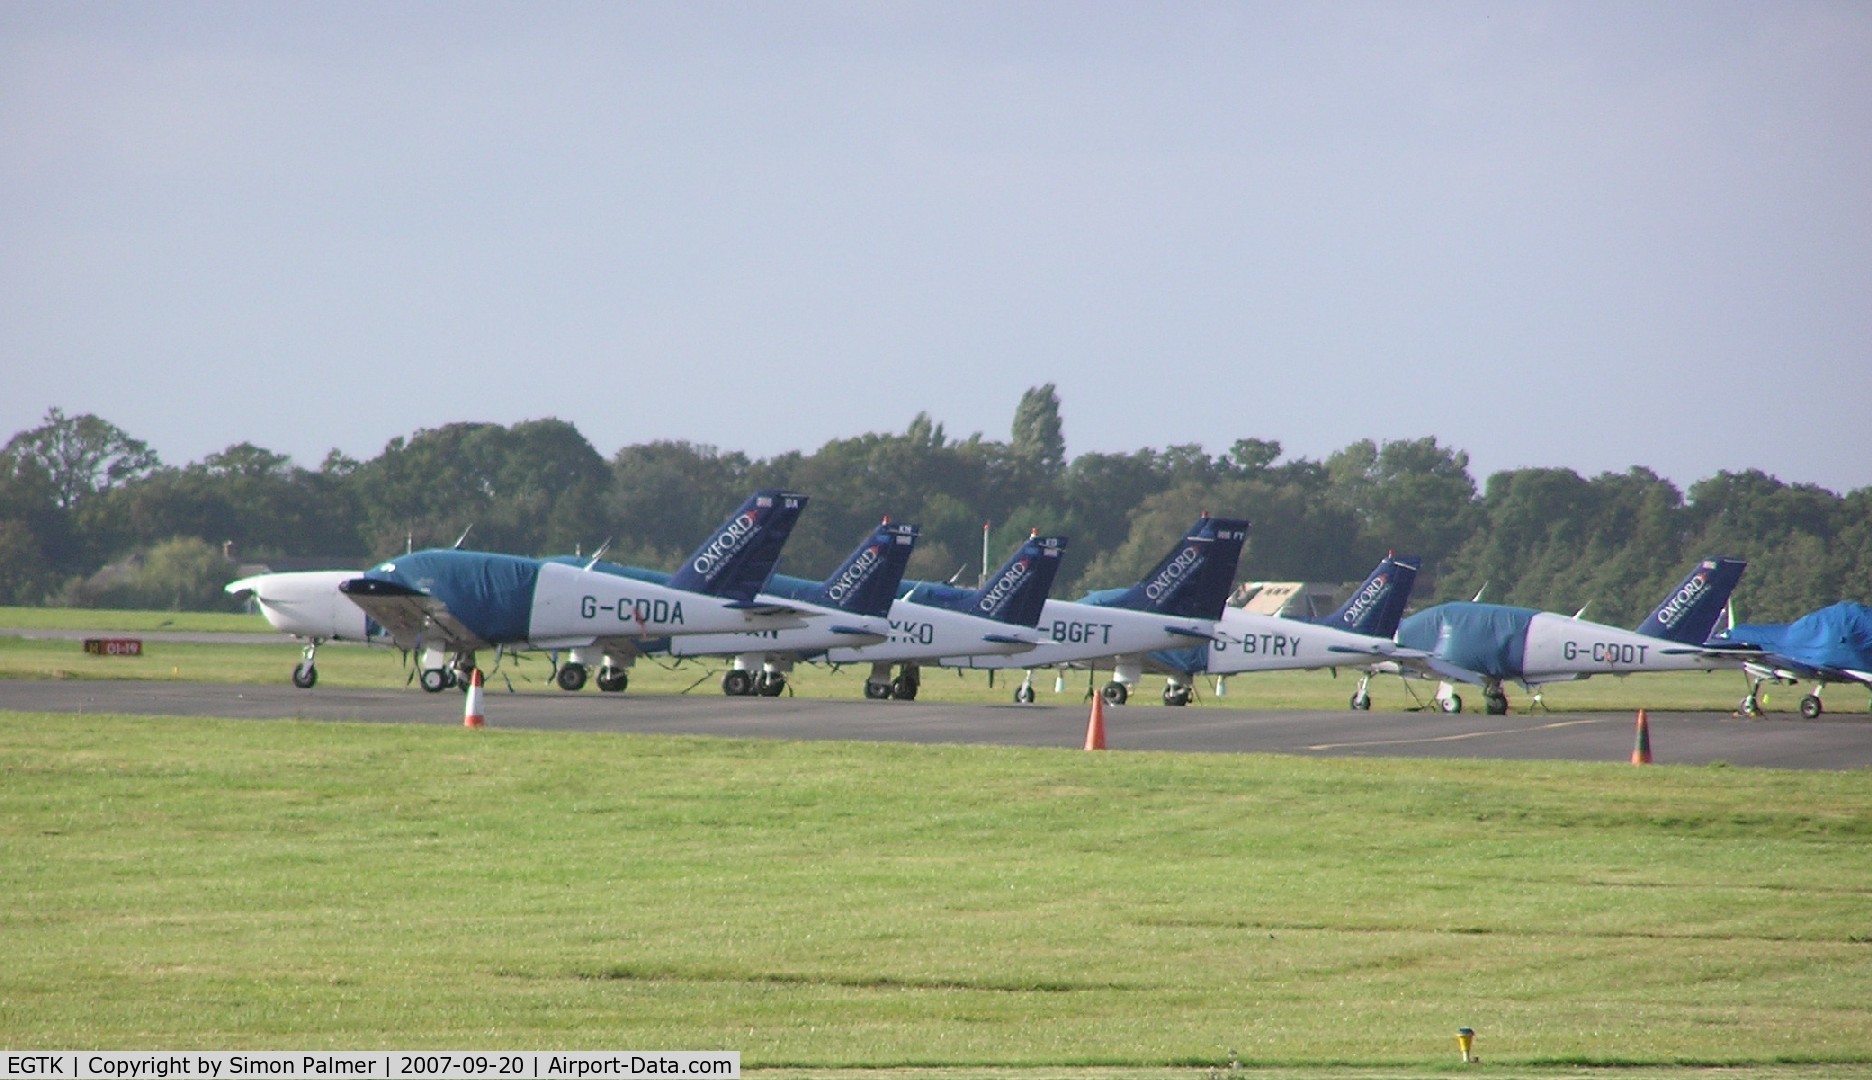 Oxford Airport, Oxford, England United Kingdom (EGTK) - Distant view of Oxford Air Training fleet